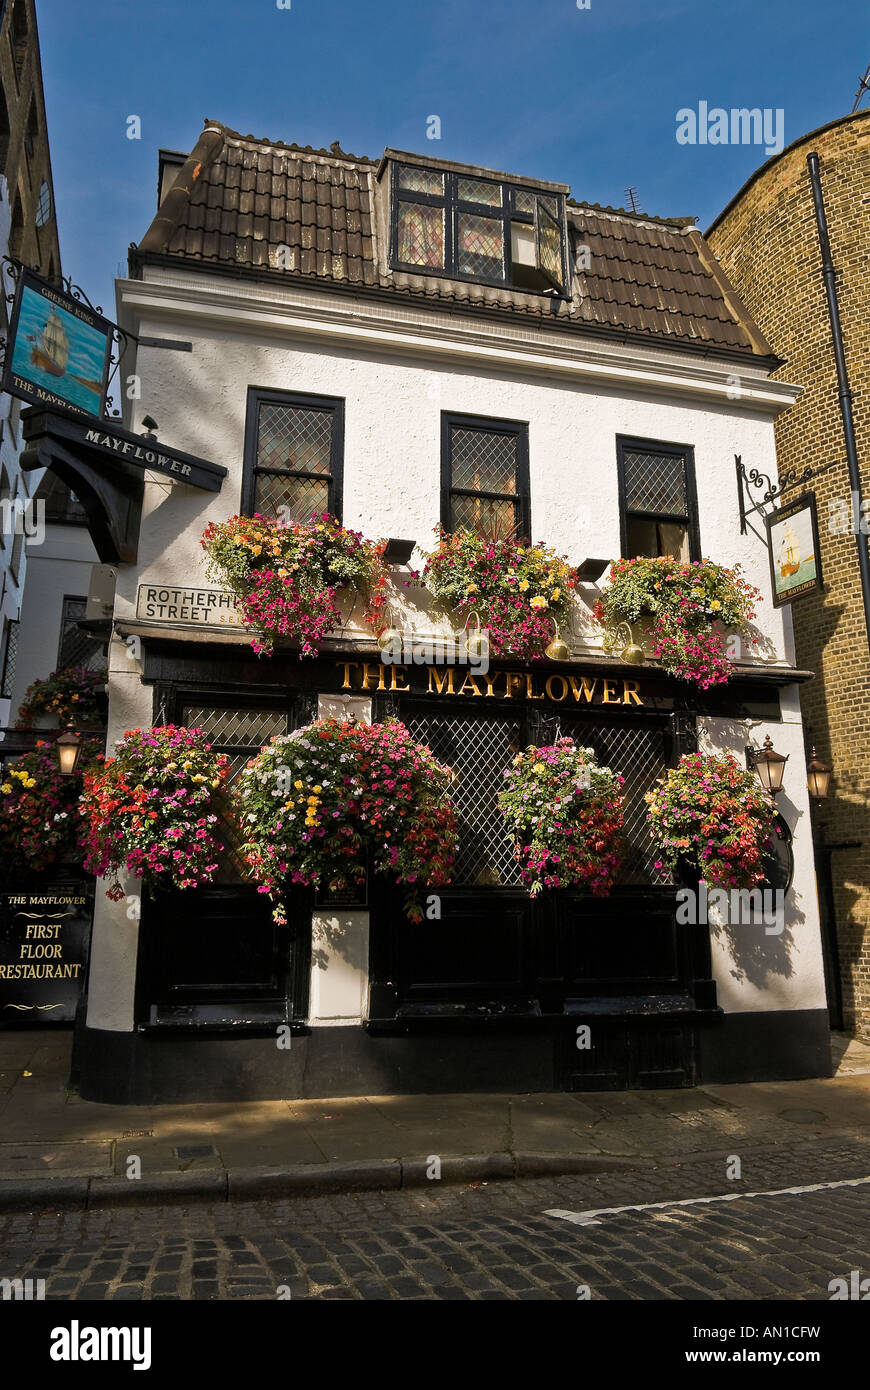 The Mayflower Inn pub and restaurant in Rotherhithe, London, SE16 Stock Photo